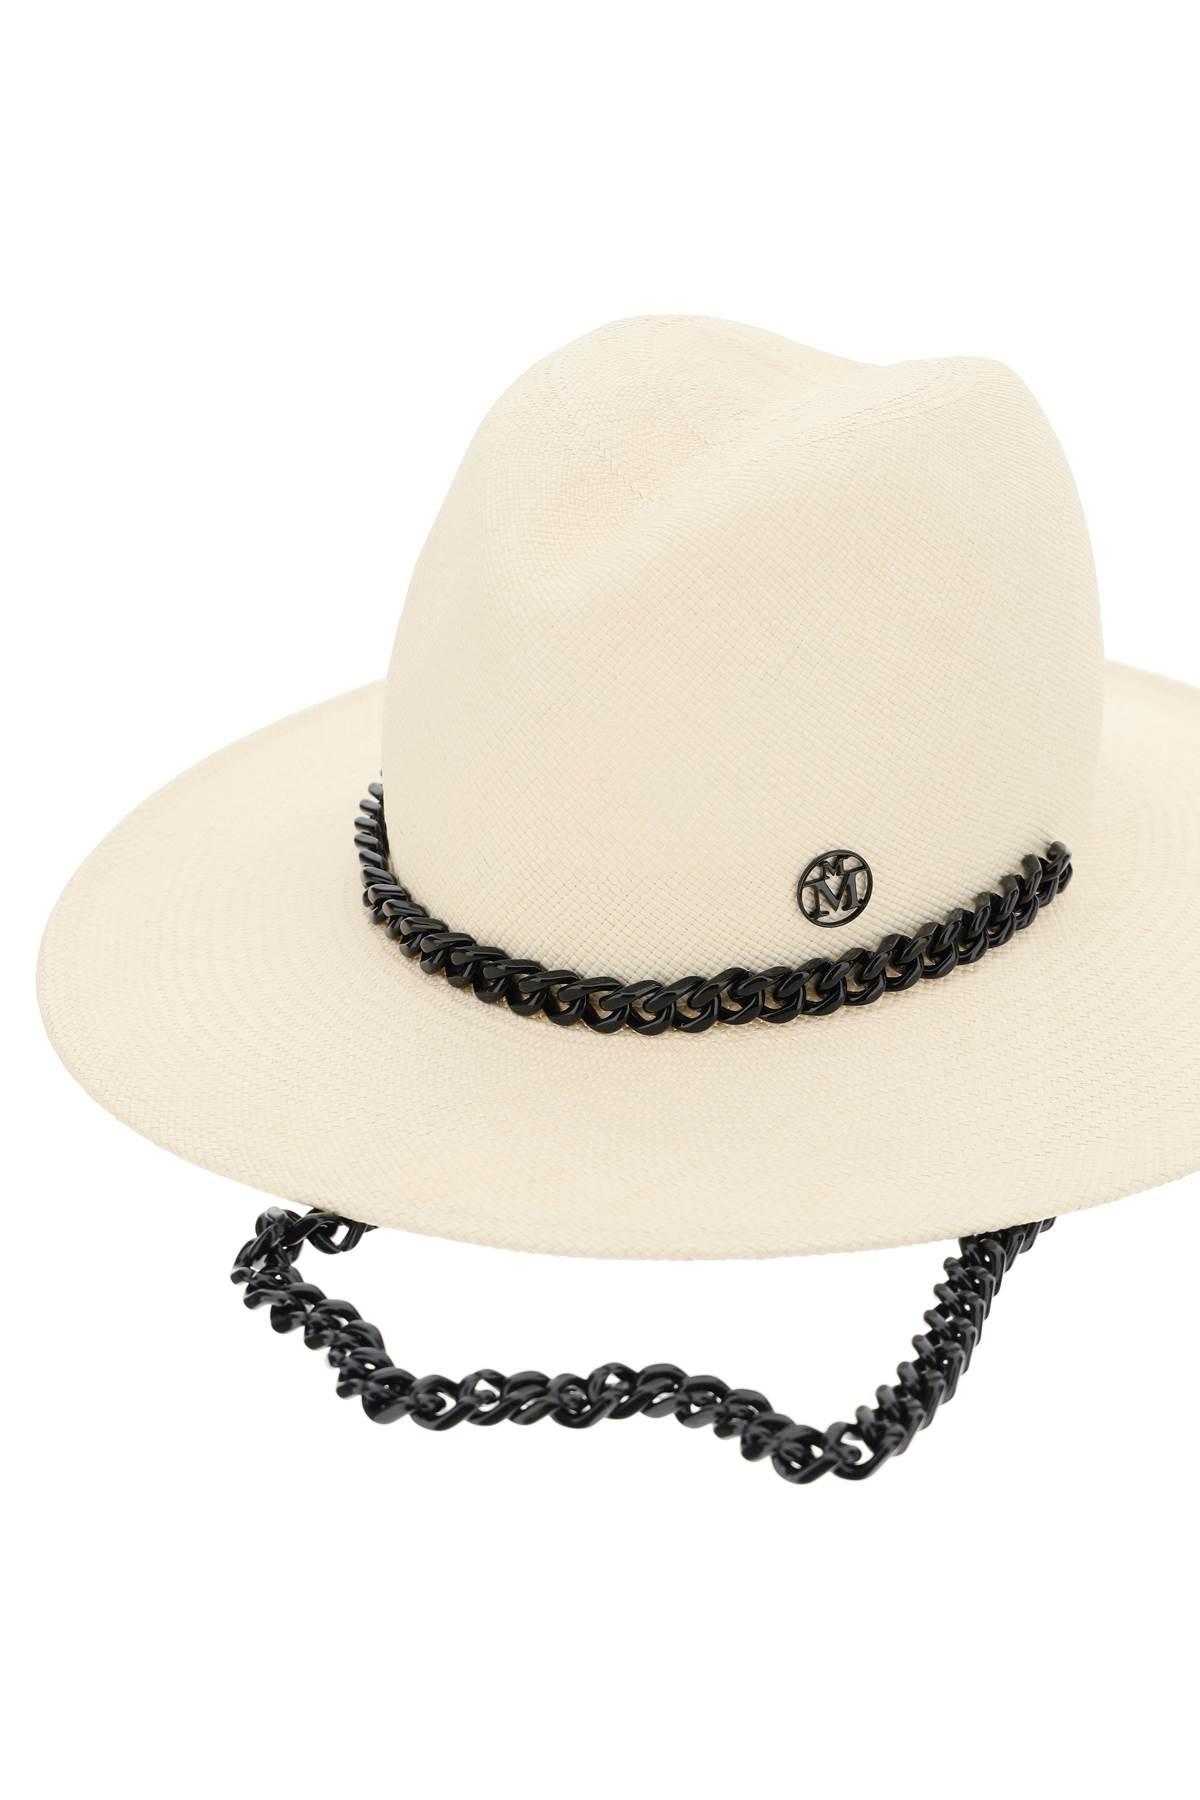 Maison Michel Zango Brisa Straw Fedora Hat in Natural | Lyst